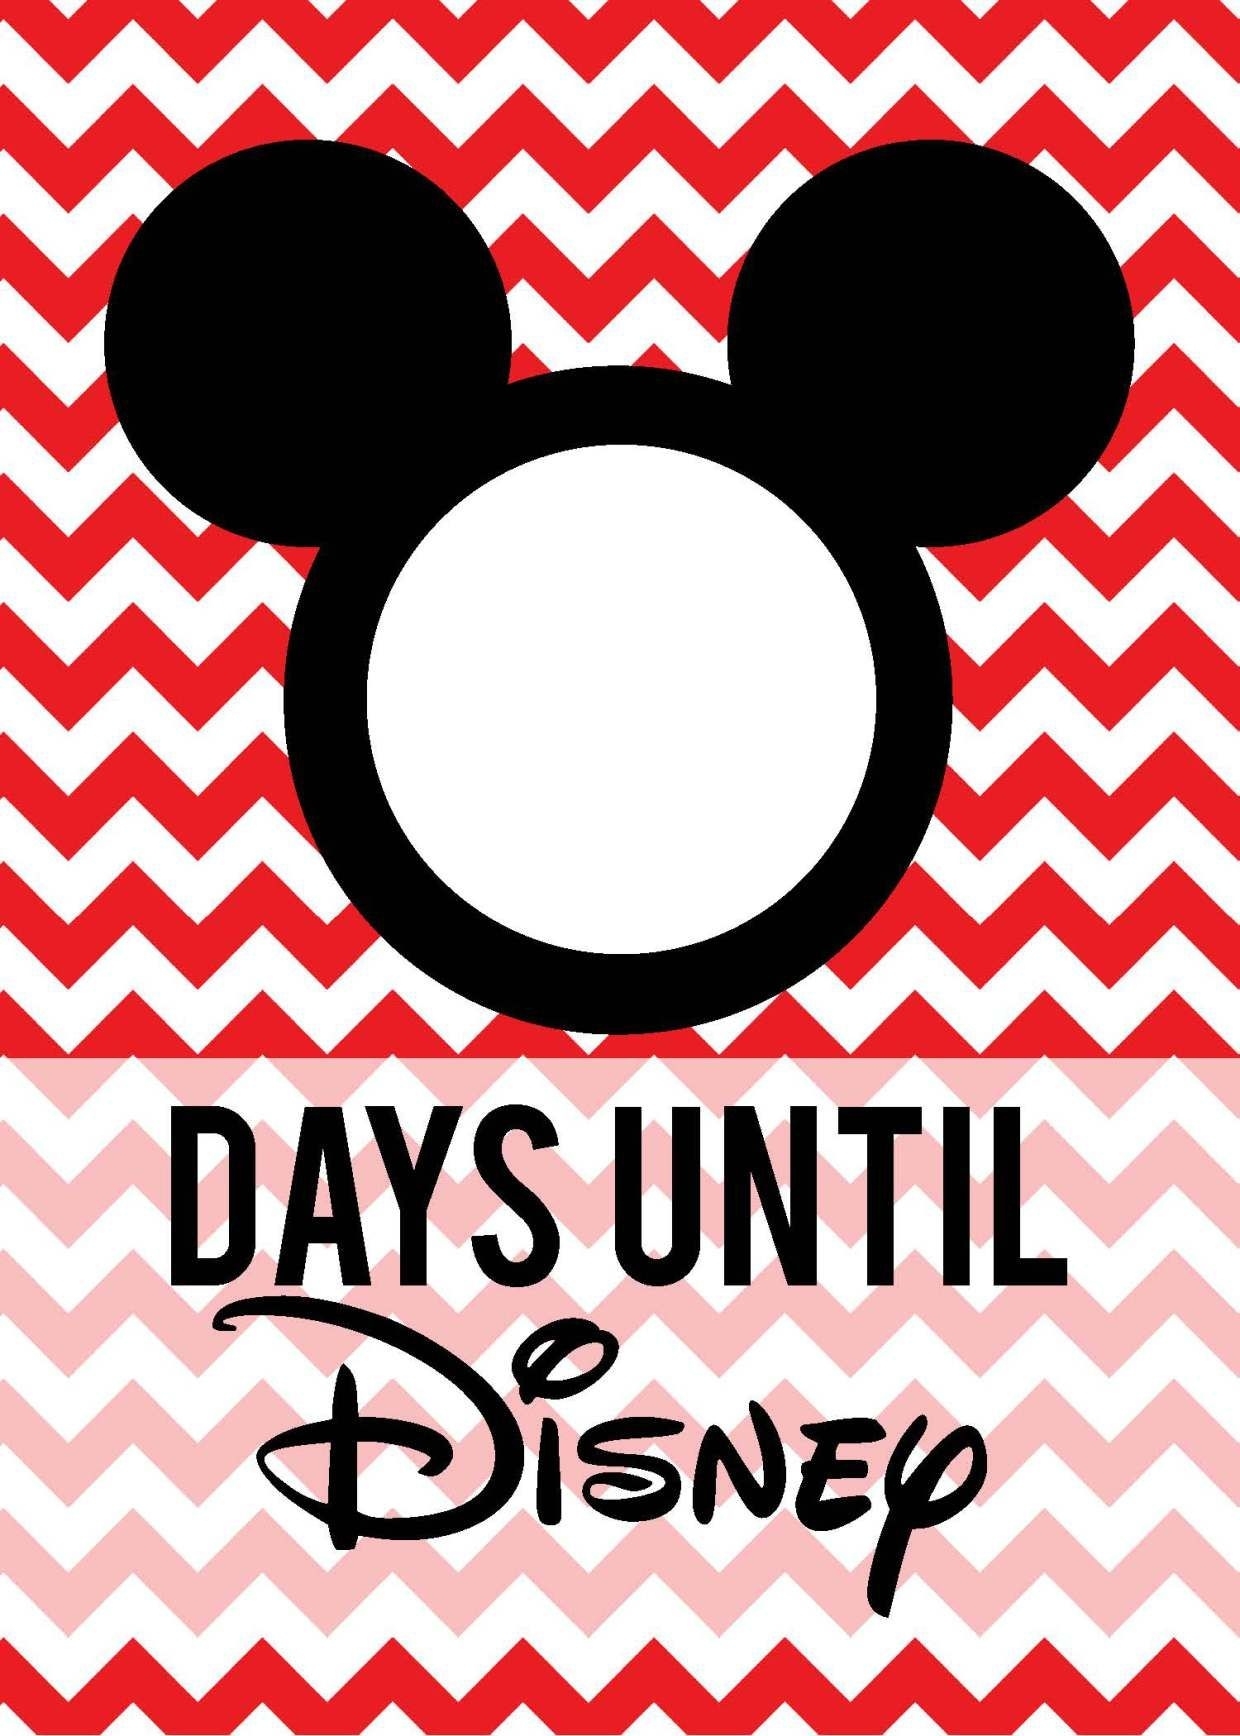 Free Download: Countdown To Disney | Disney Countdown Count Diwn To Disneyland Trip